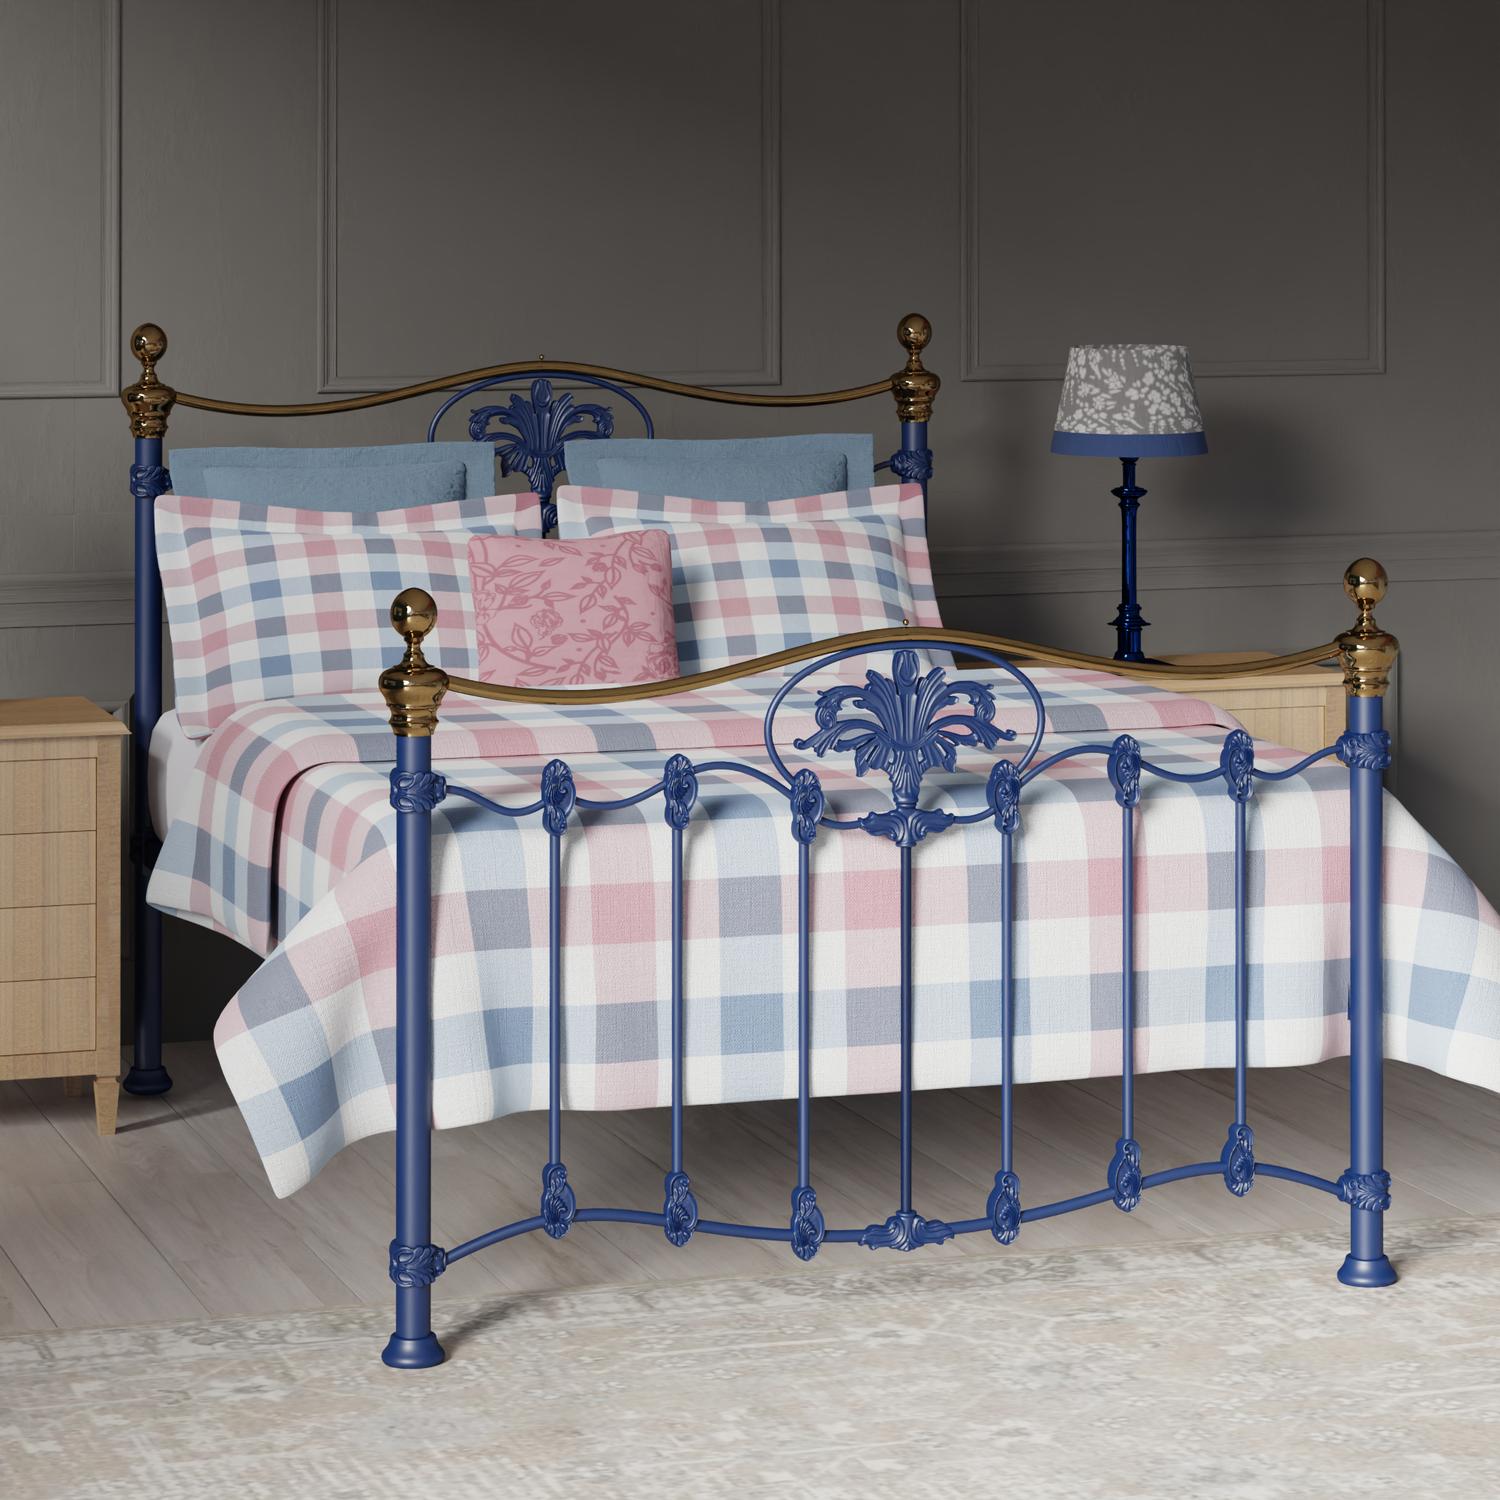 Camolin iron bed - Image royal blue bedroom